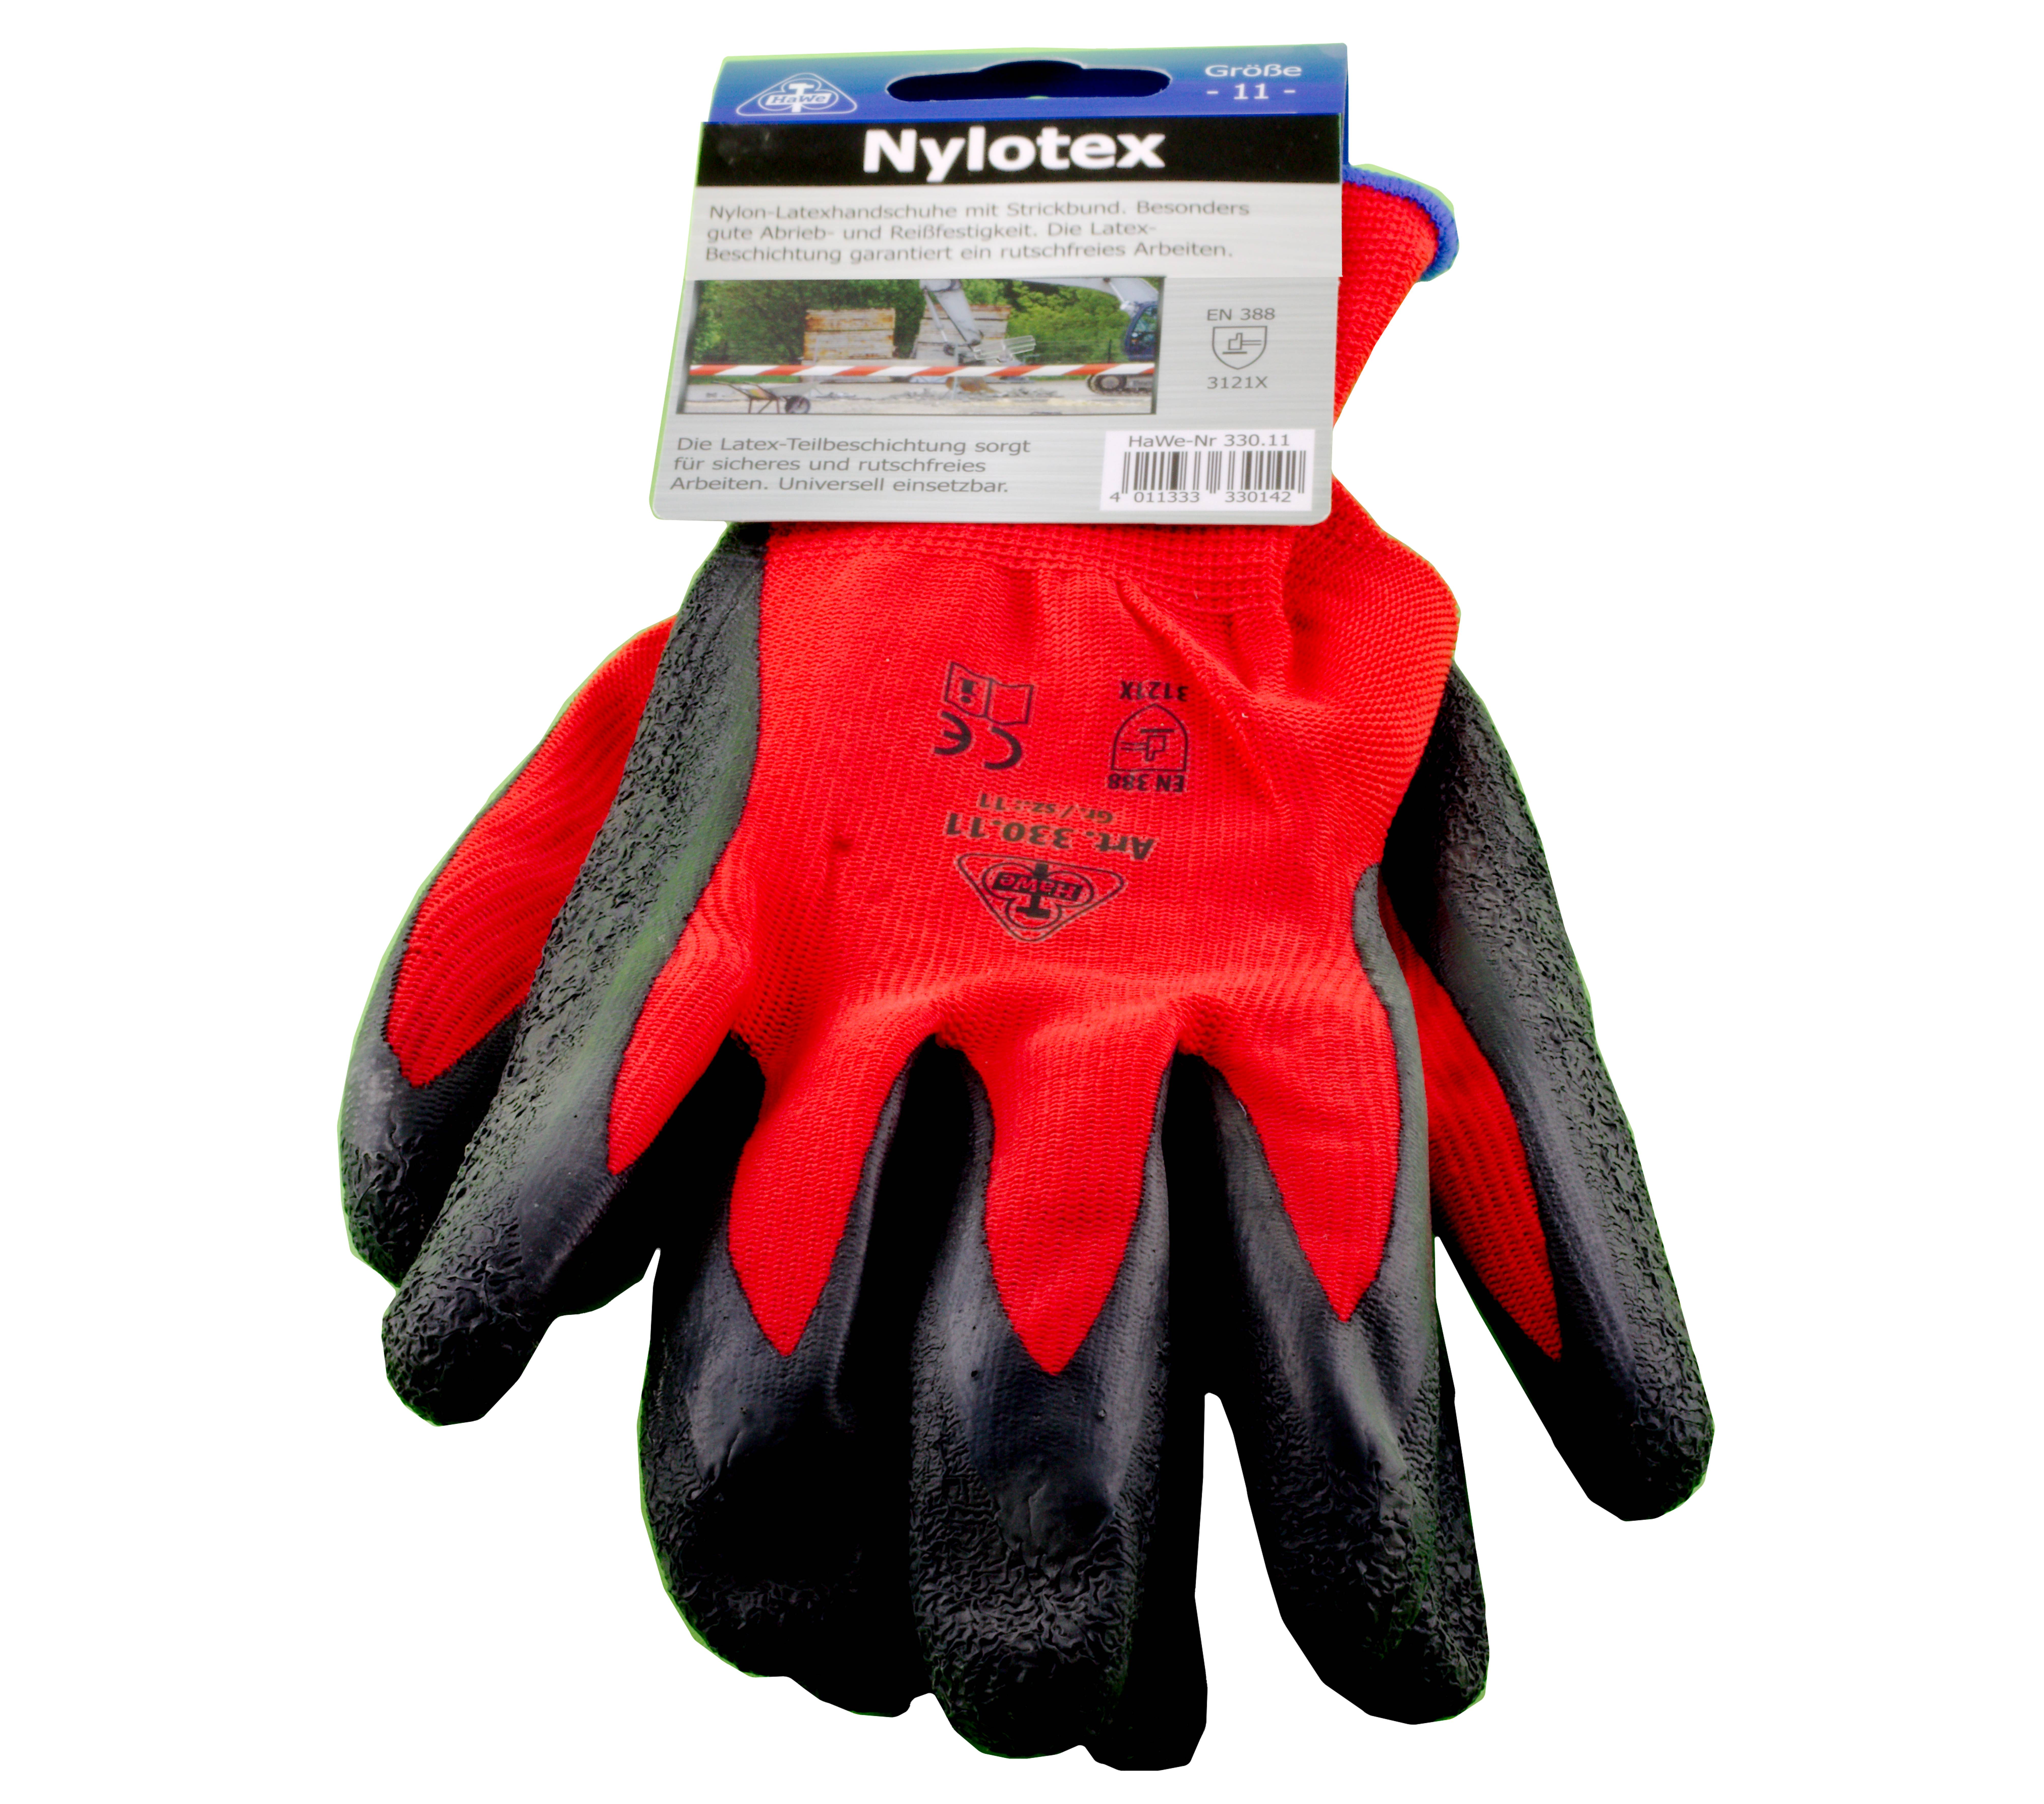 Handschuhe Nylotex rot-schwarz  Gr. 10